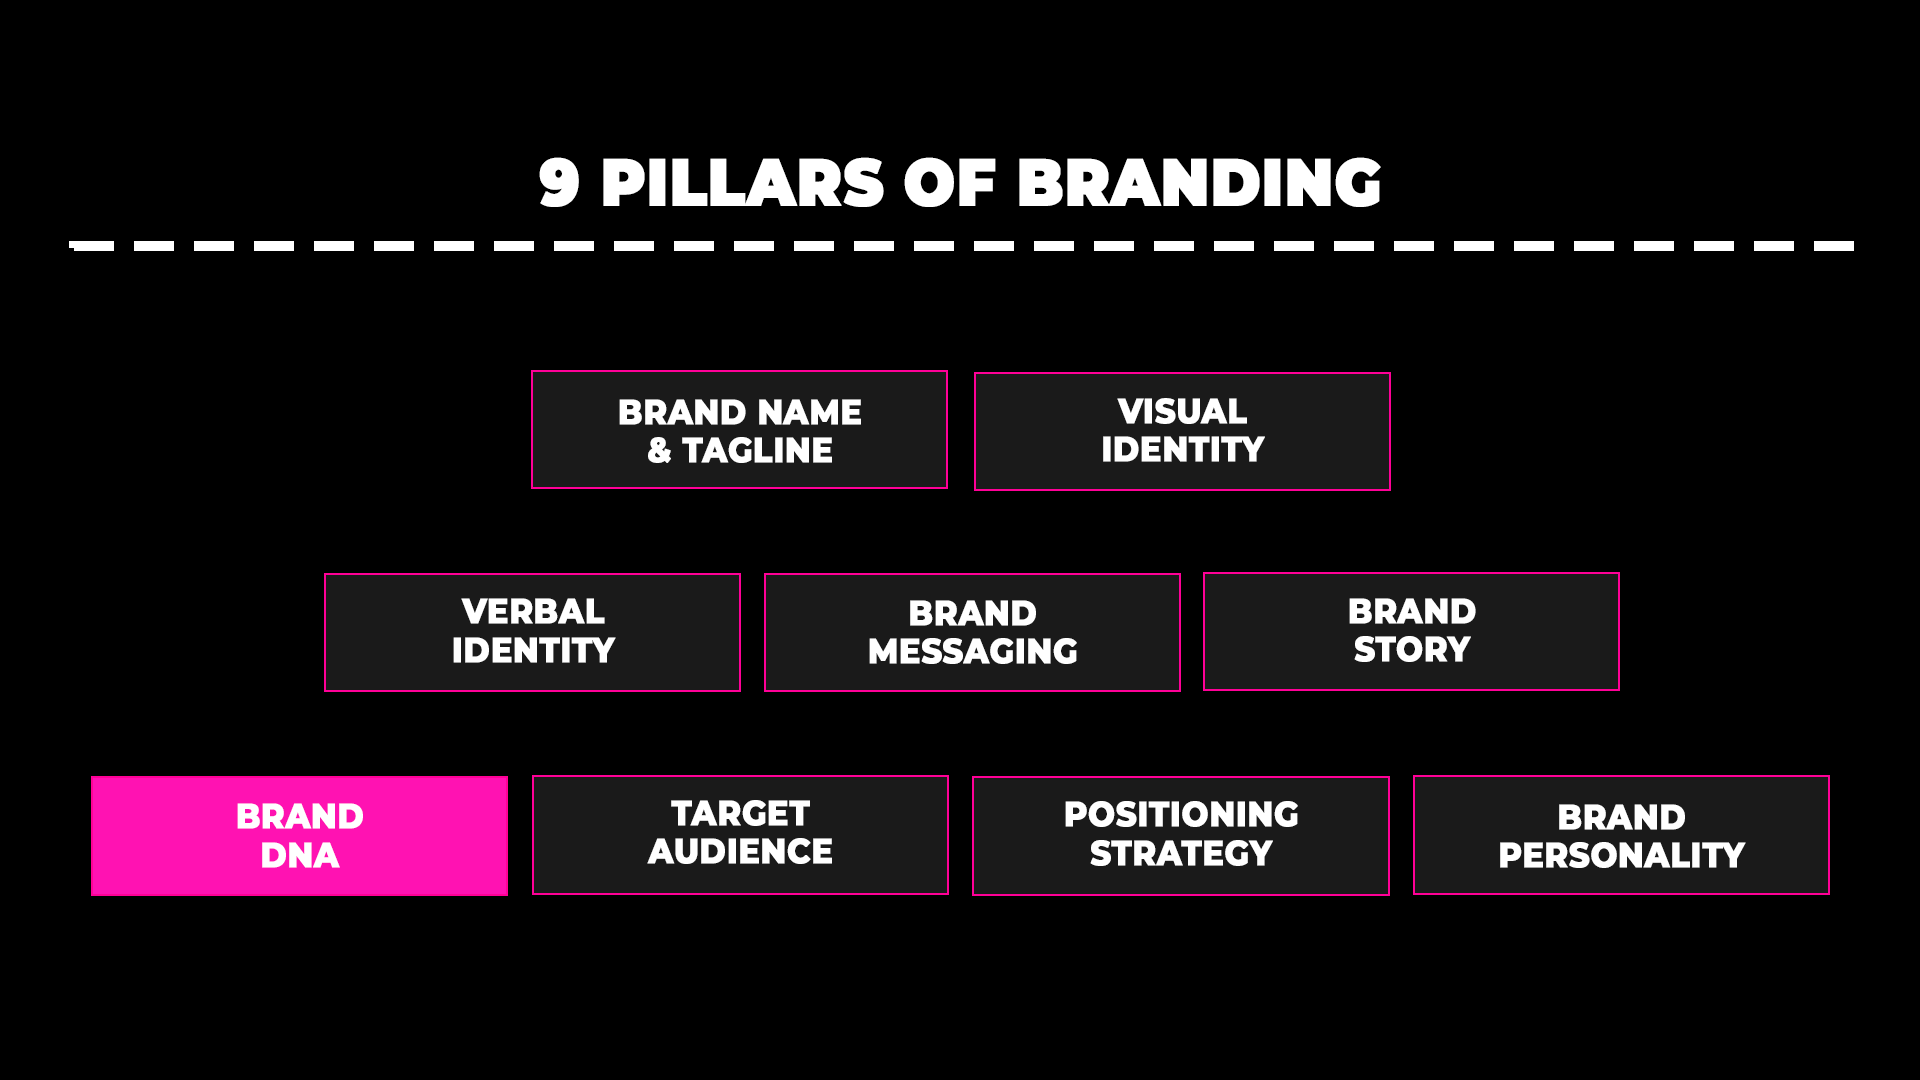 Brand Foundation, Brand Strategy, Brand Positioning